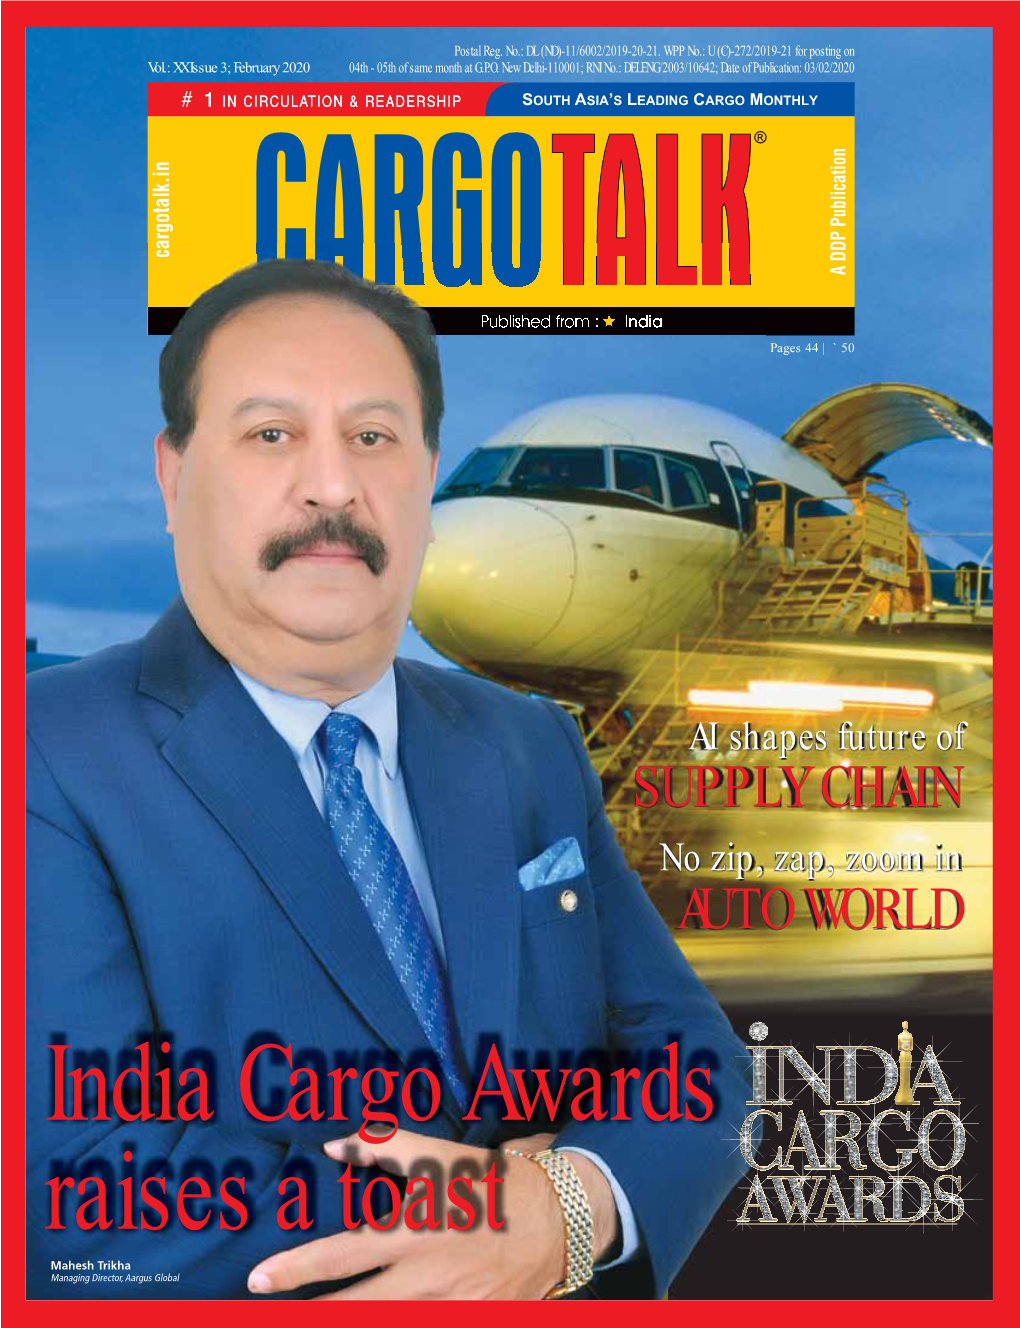 India Cargo Awards Raises a Toast